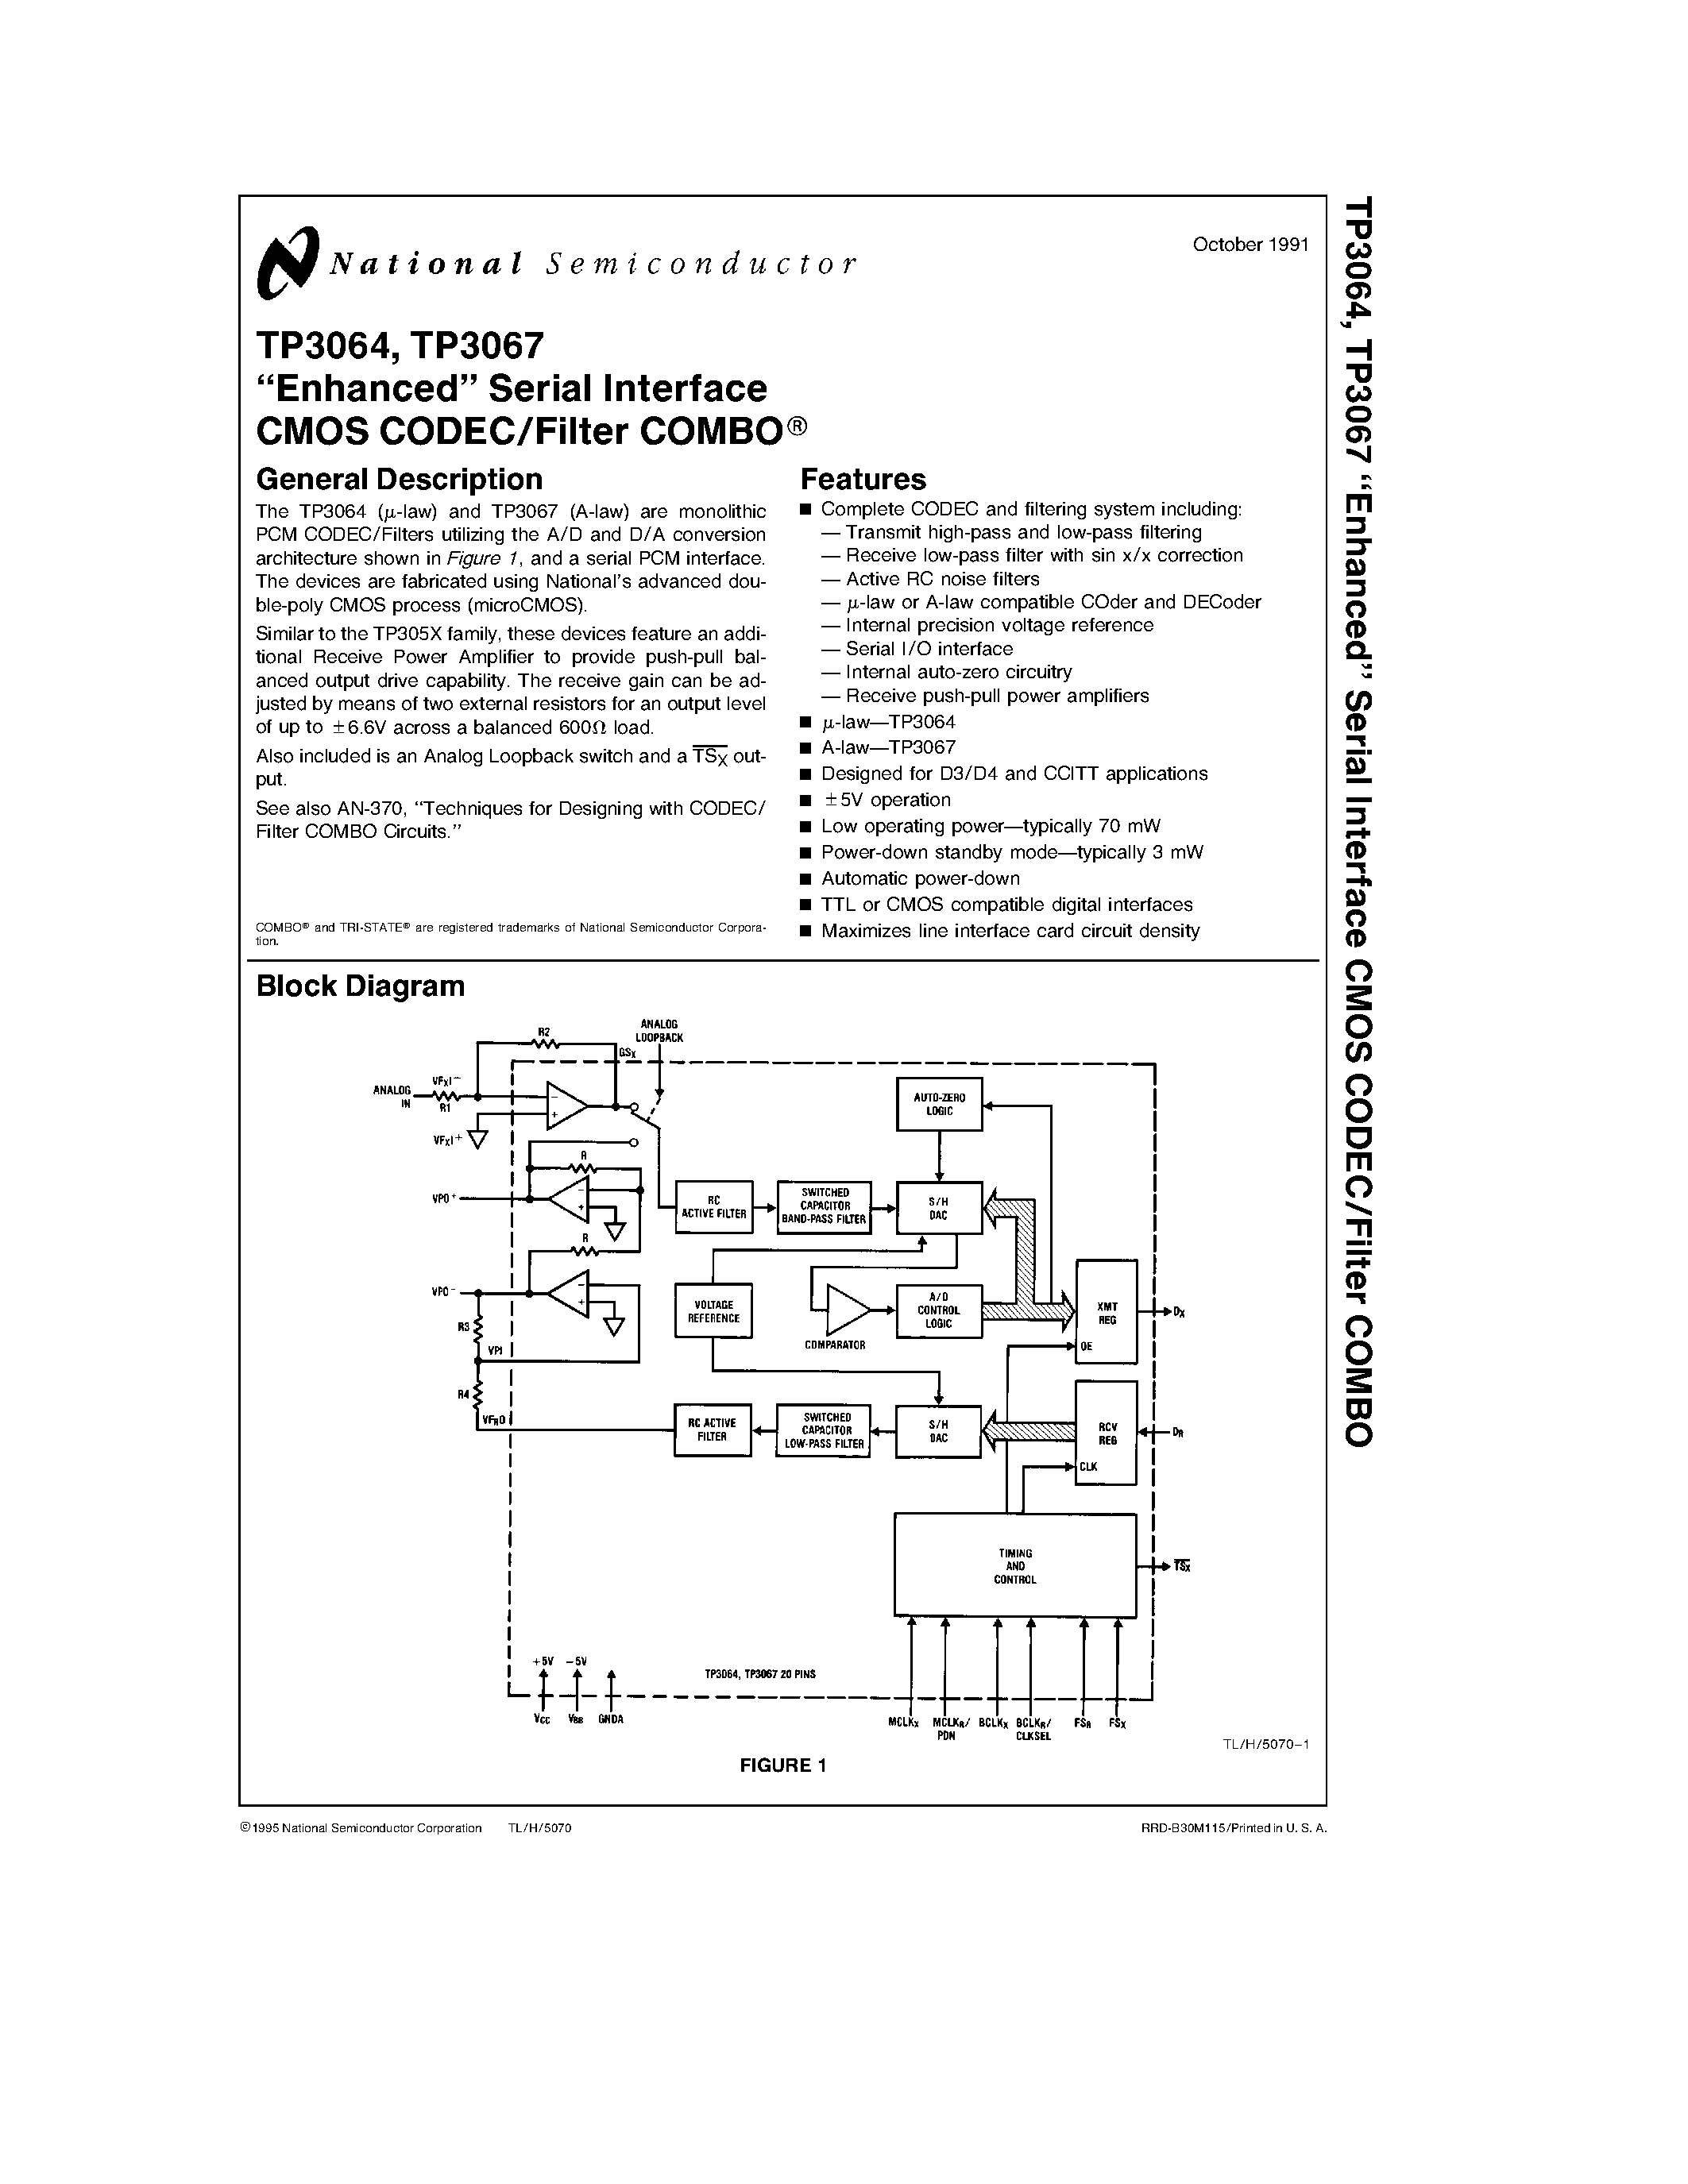 Даташит TP3067 - Enhanced Serial Interface CMOS CODEC/Filter COMBO страница 1